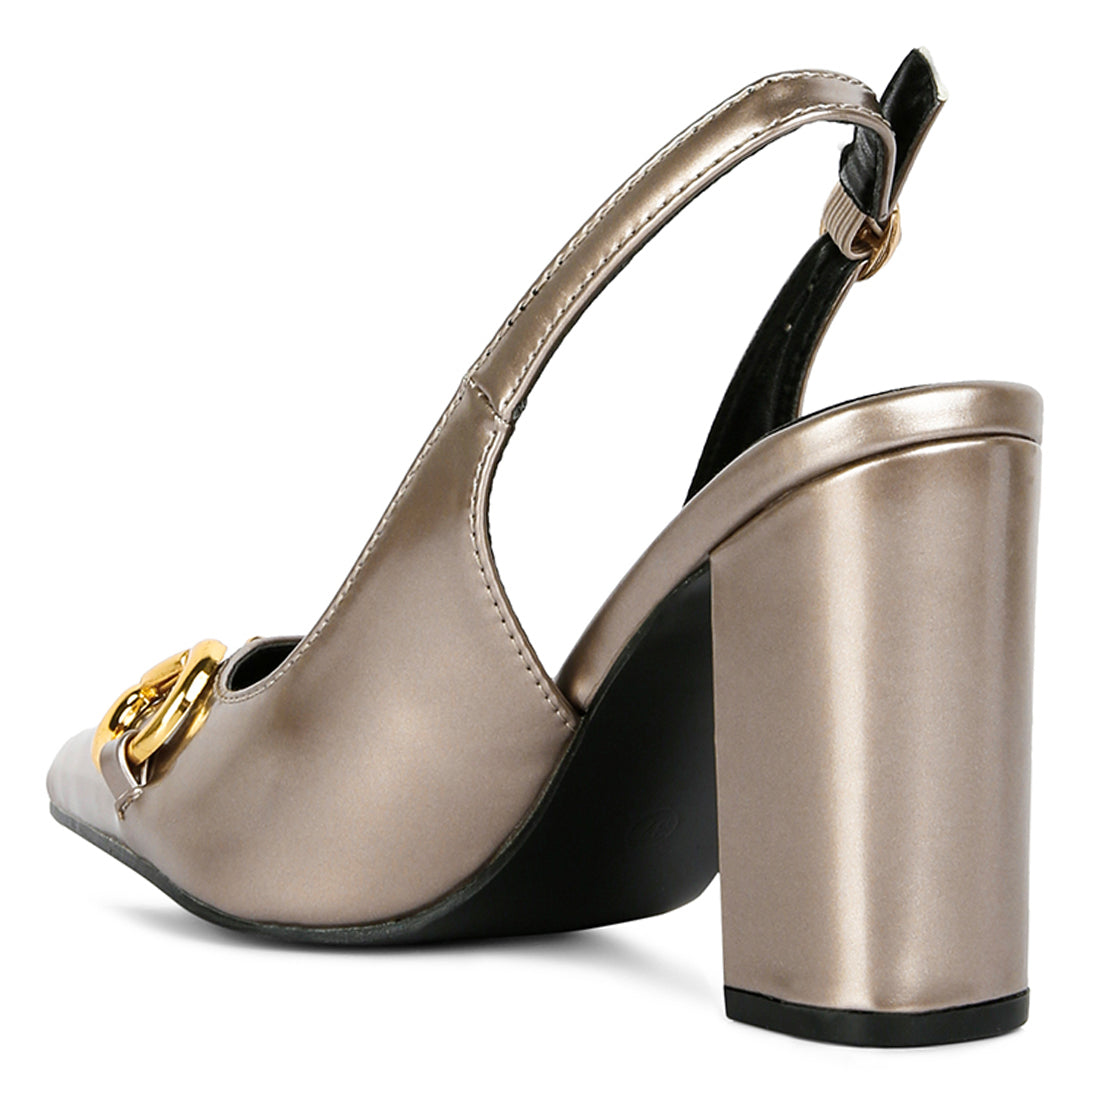 Gold Patent Slingback Sandals